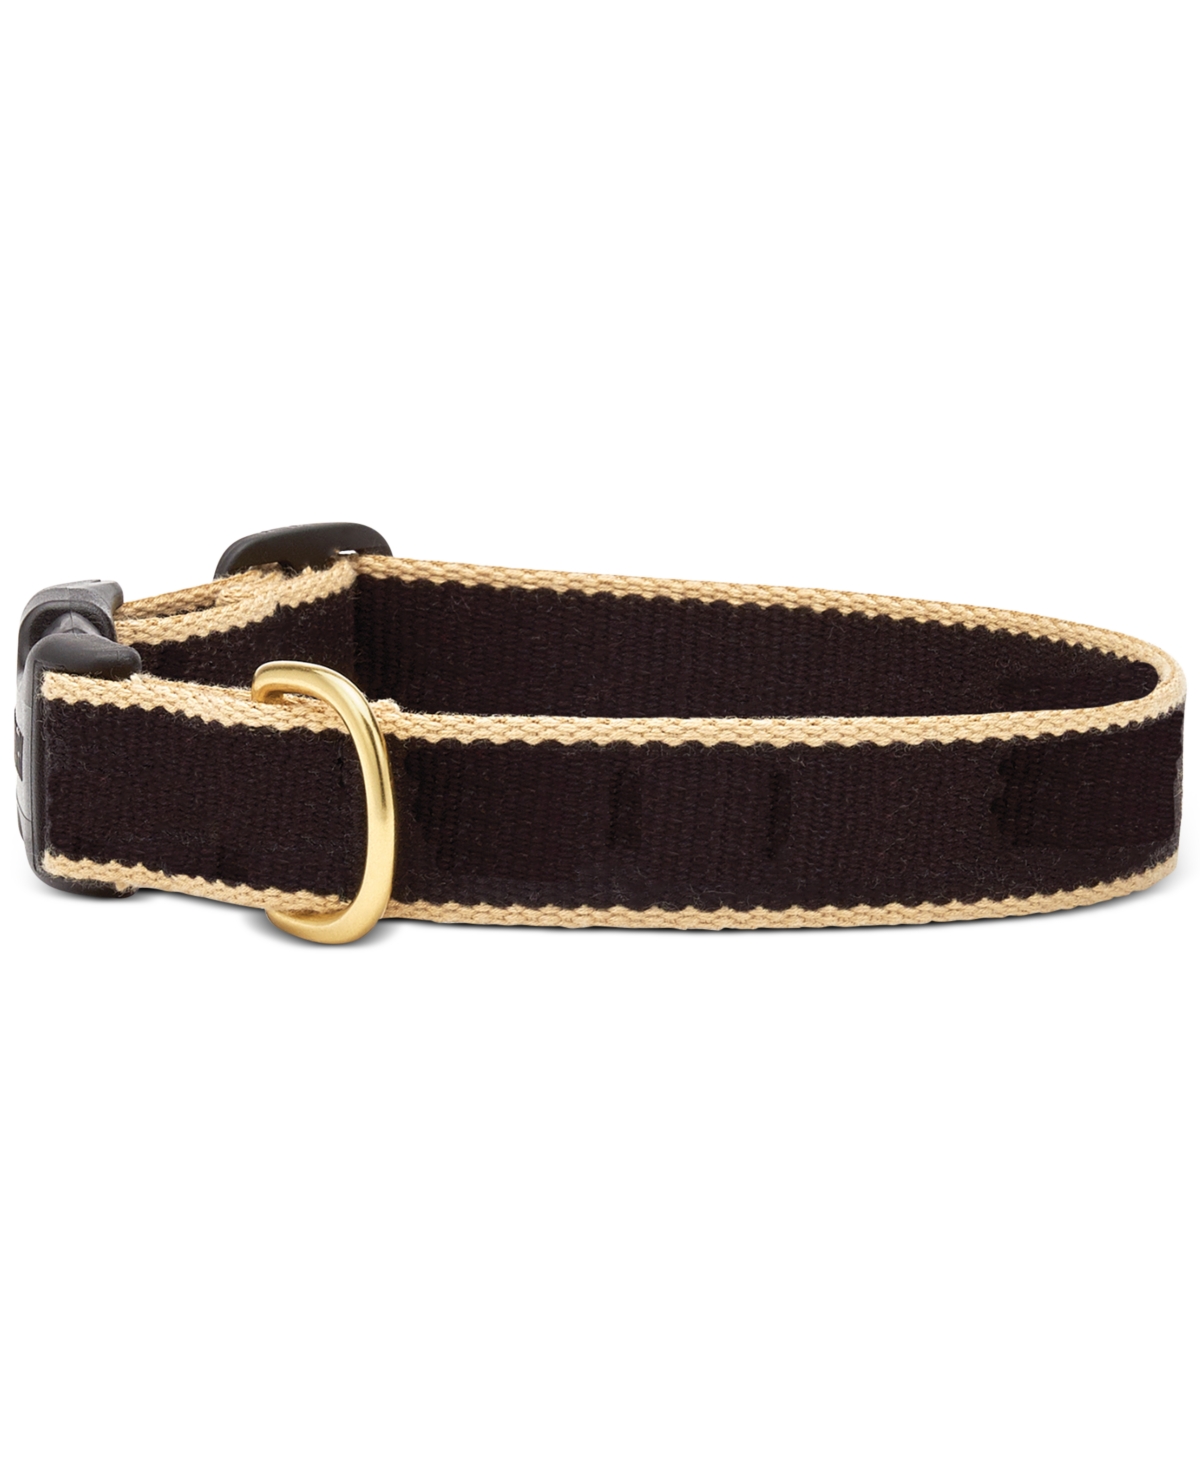 Adjustable Dog Collars - Black/Tan